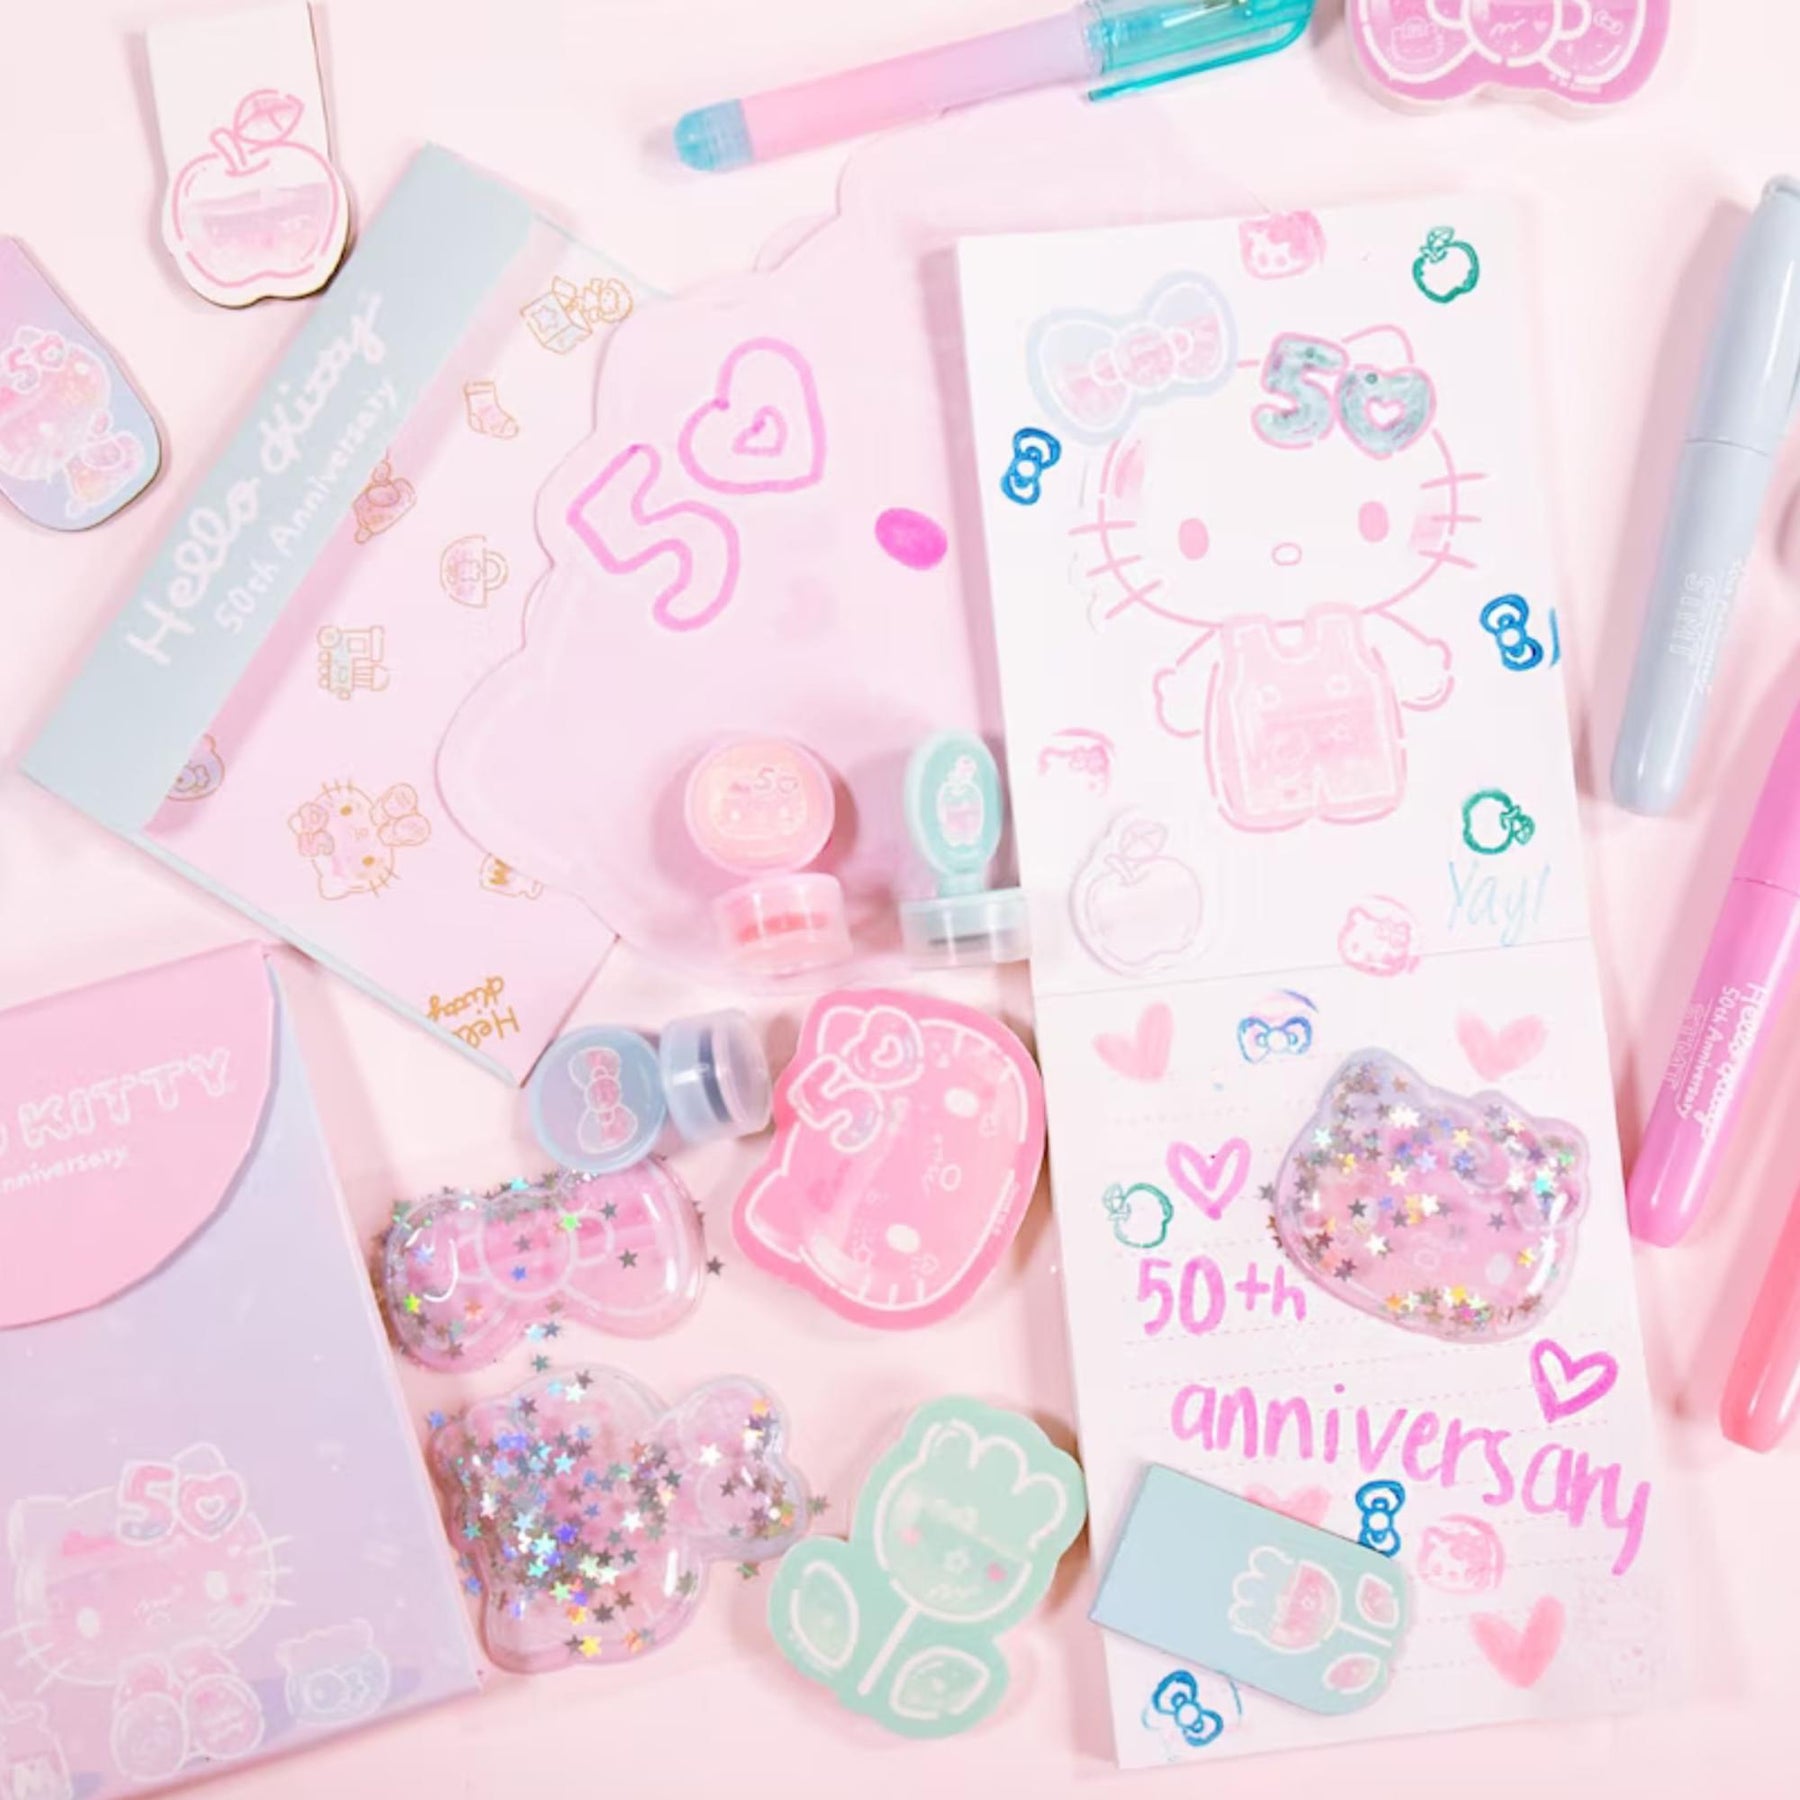 Sanrio Hello Kitty x STMT 50th Anniversary Mini Collectible Stationary Set